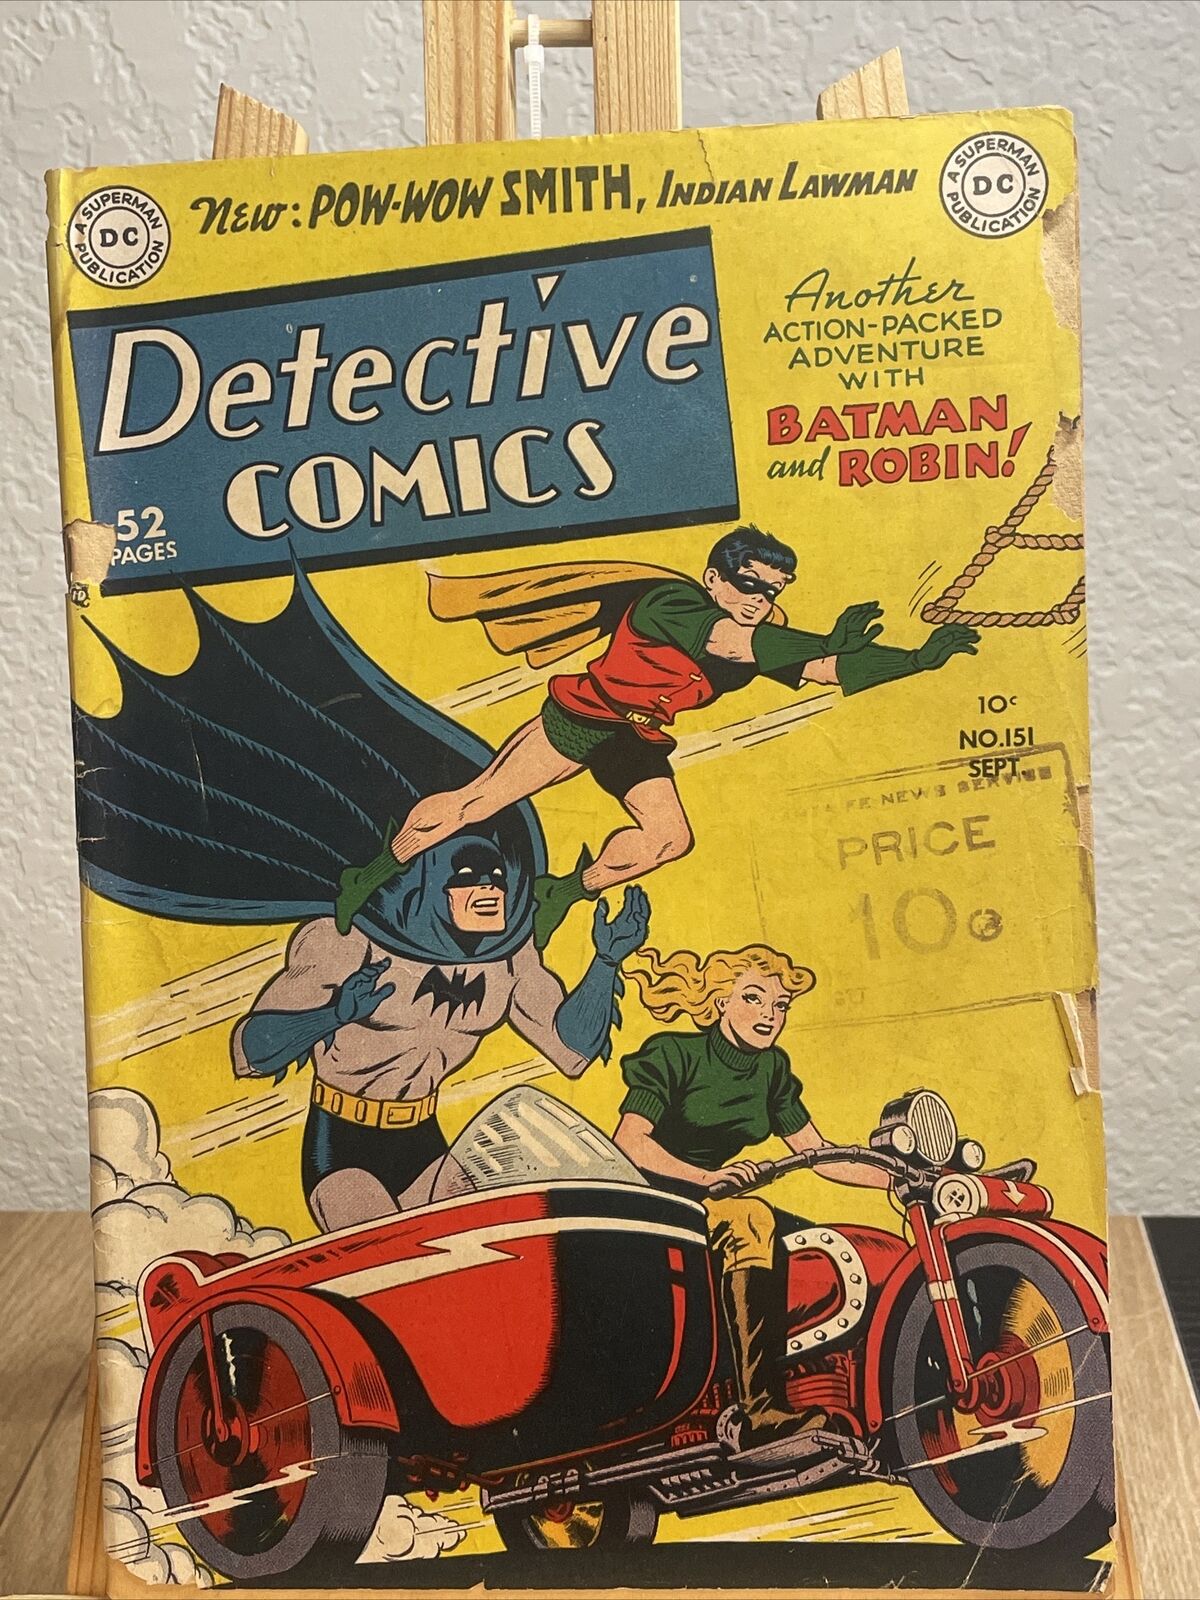 Detective Comics #151 (DC Comics 1949) - 1st Appearance Of Pow Pow Smith